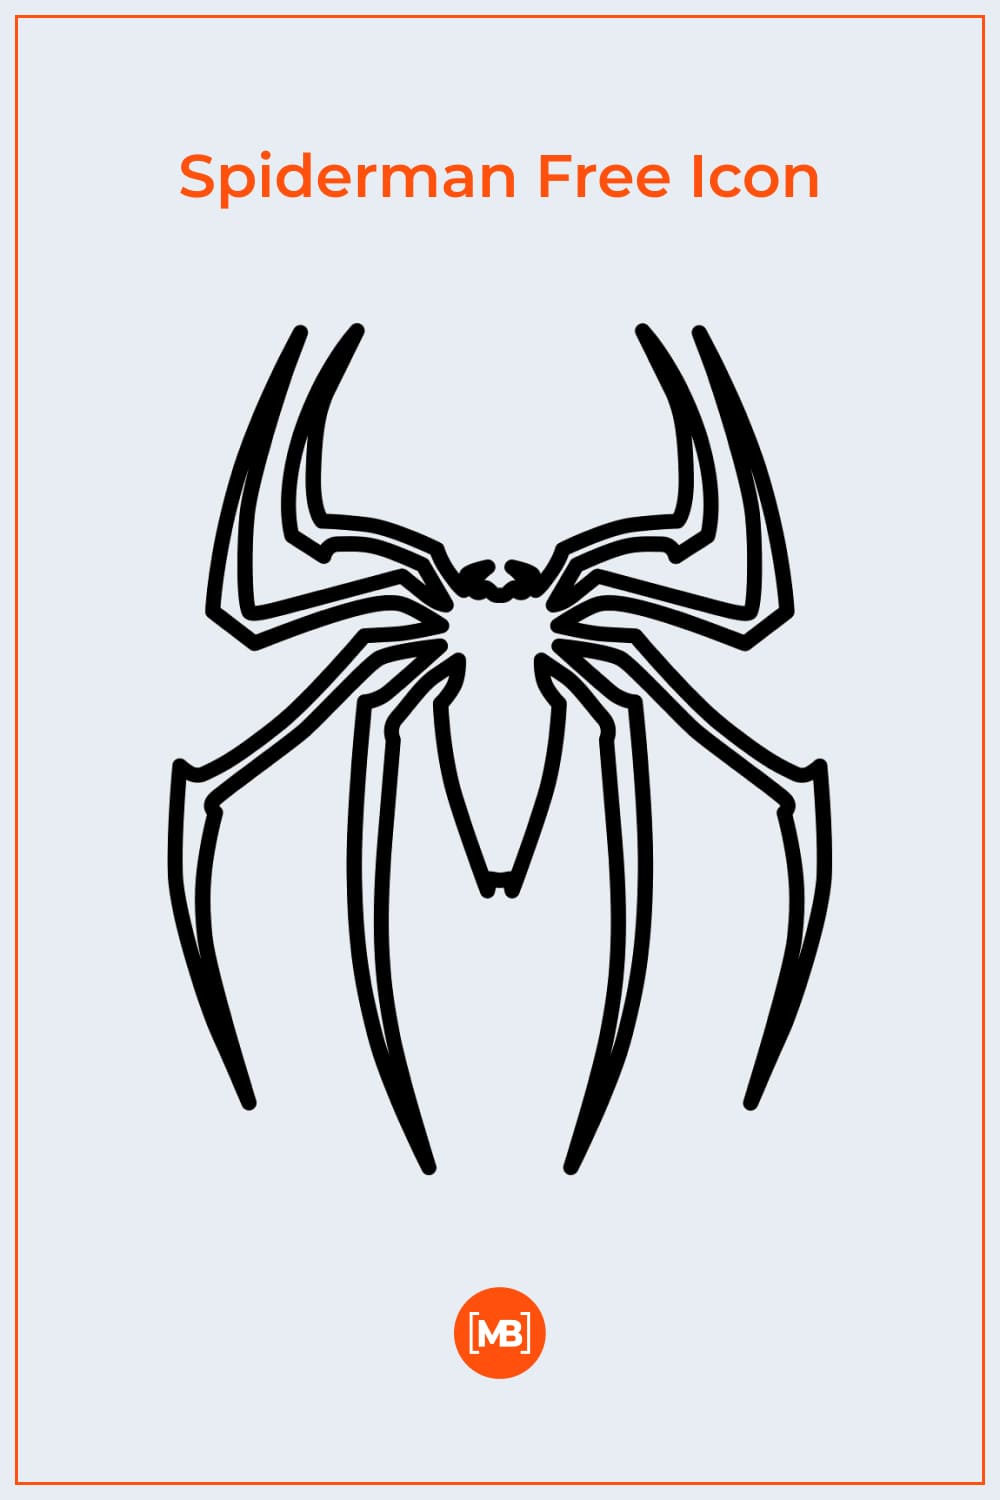 Spiderman free SVG.